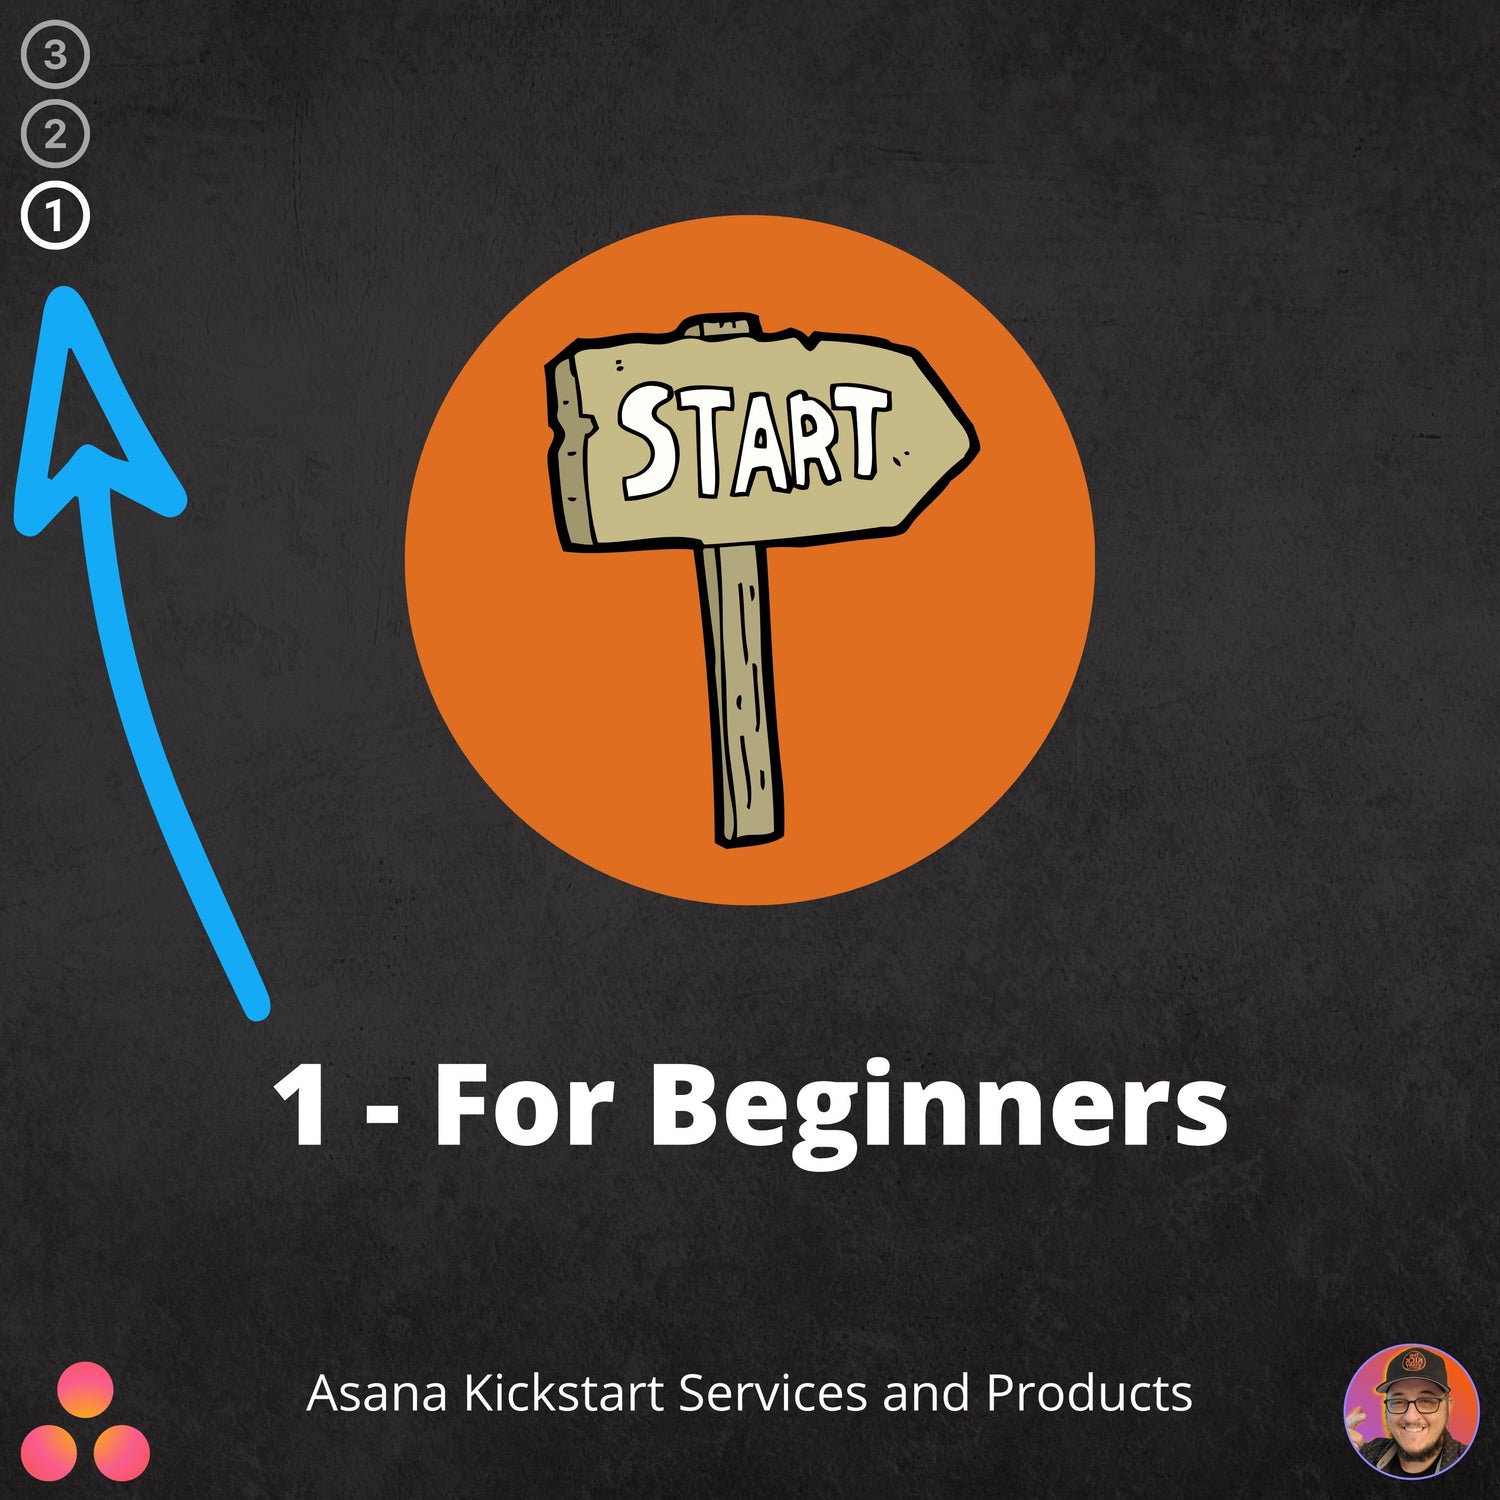 Asana Kickstart - (1) For Beginners